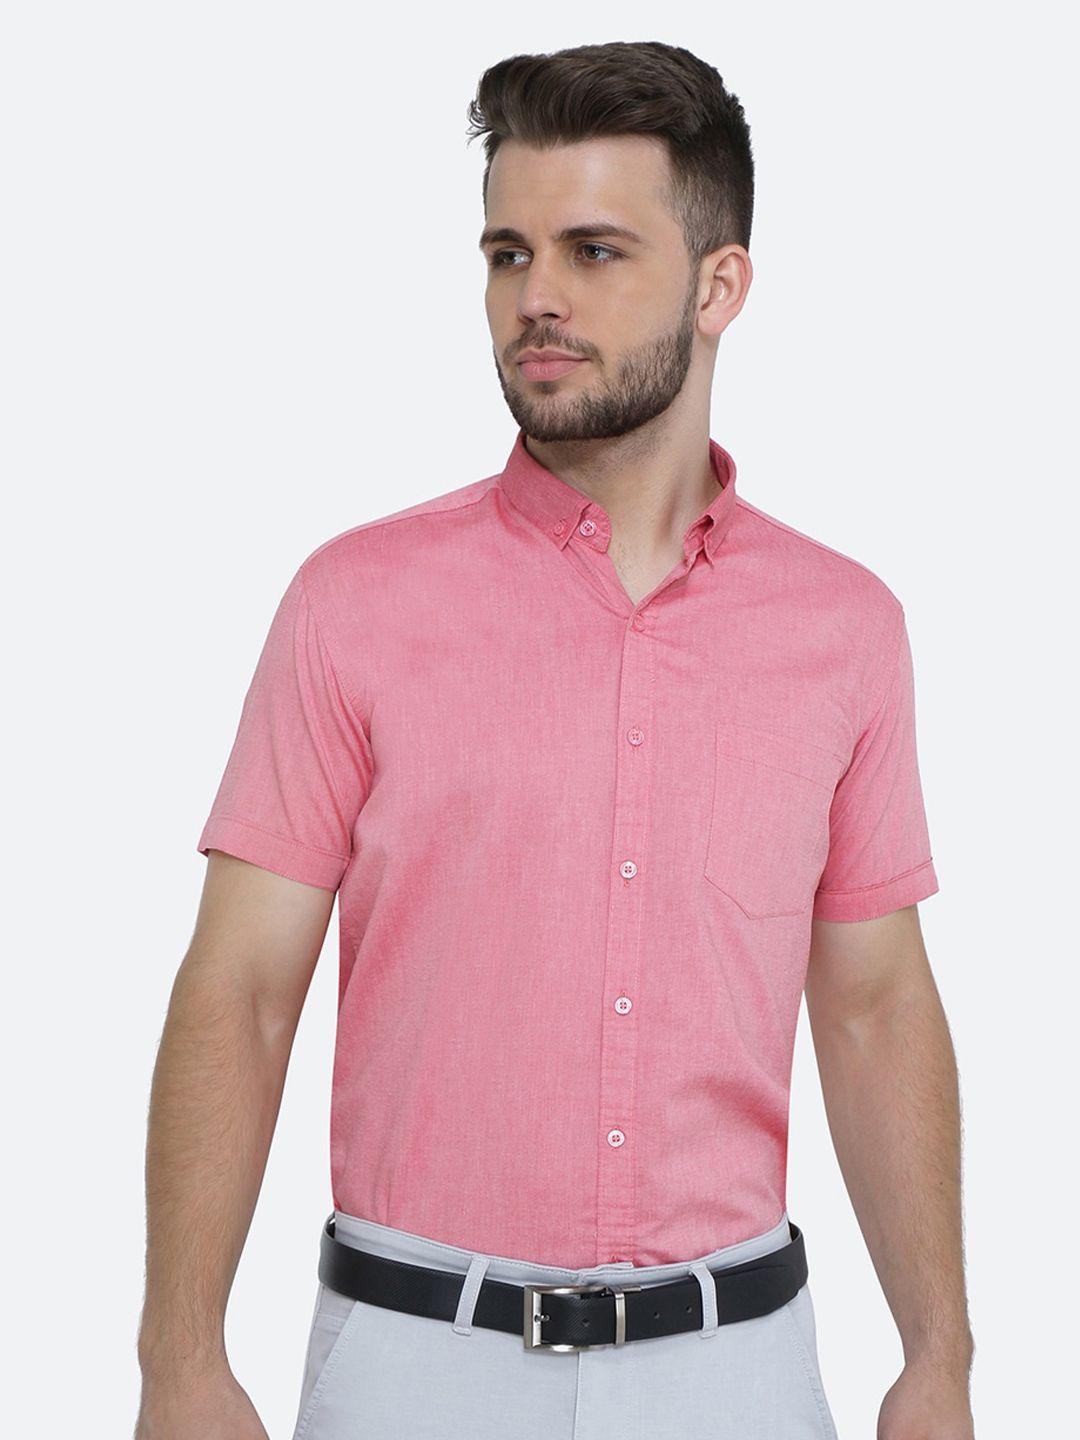 kuons avenue smart slim fit button-down collar oxford weave cotton formal shirt